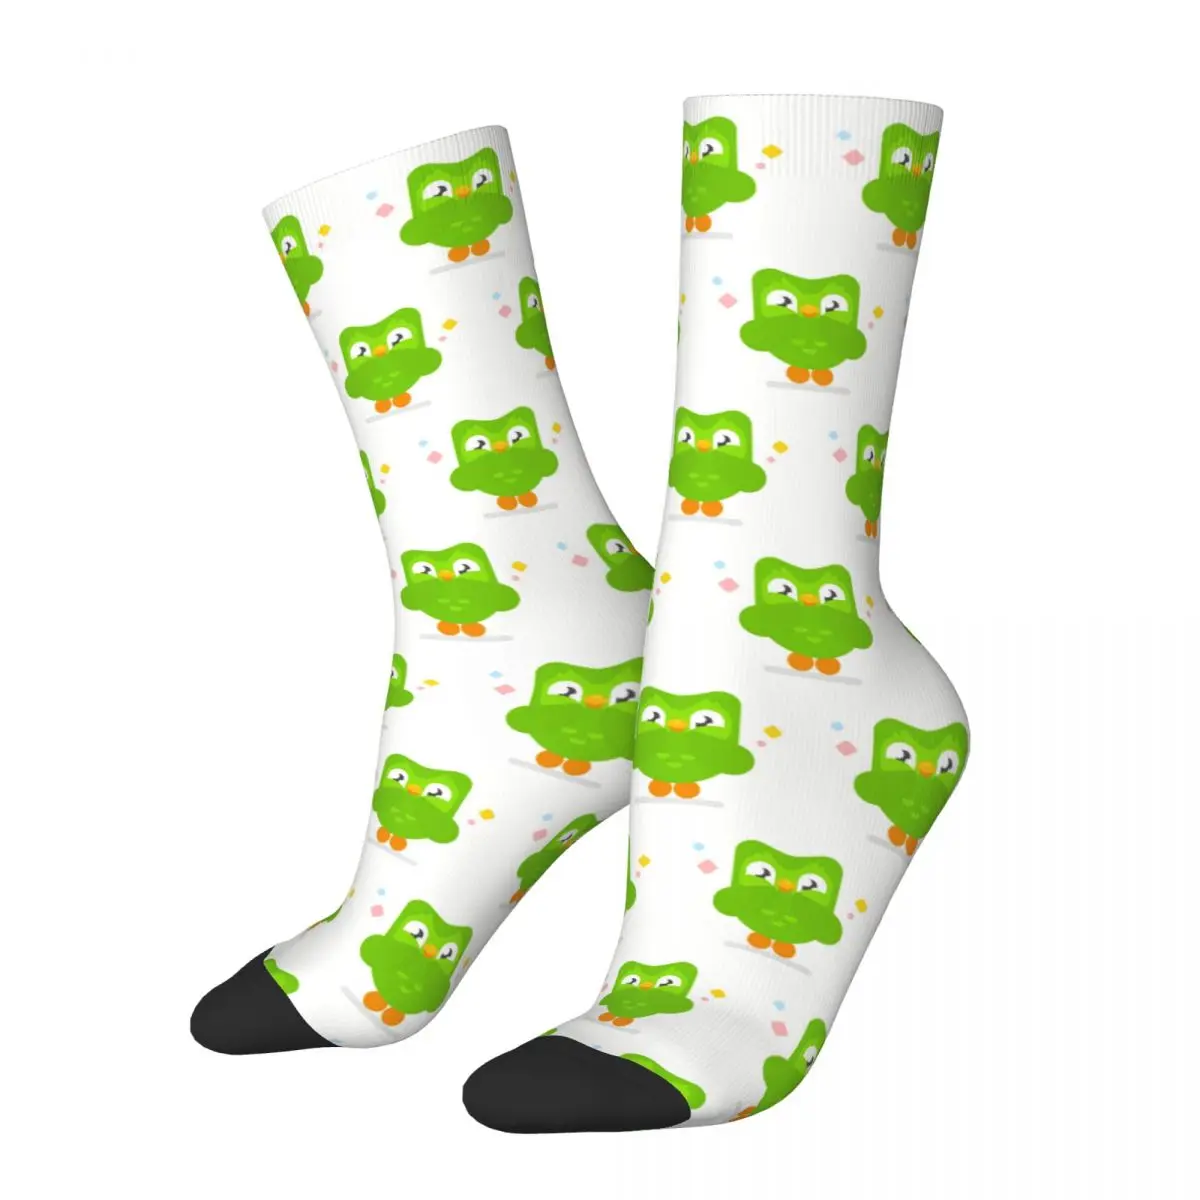 

Duolingo Owl Duo 6 Socks Harajuku Super Soft Stockings All Season Long Socks Accessories for Man's Woman's Birthday Present